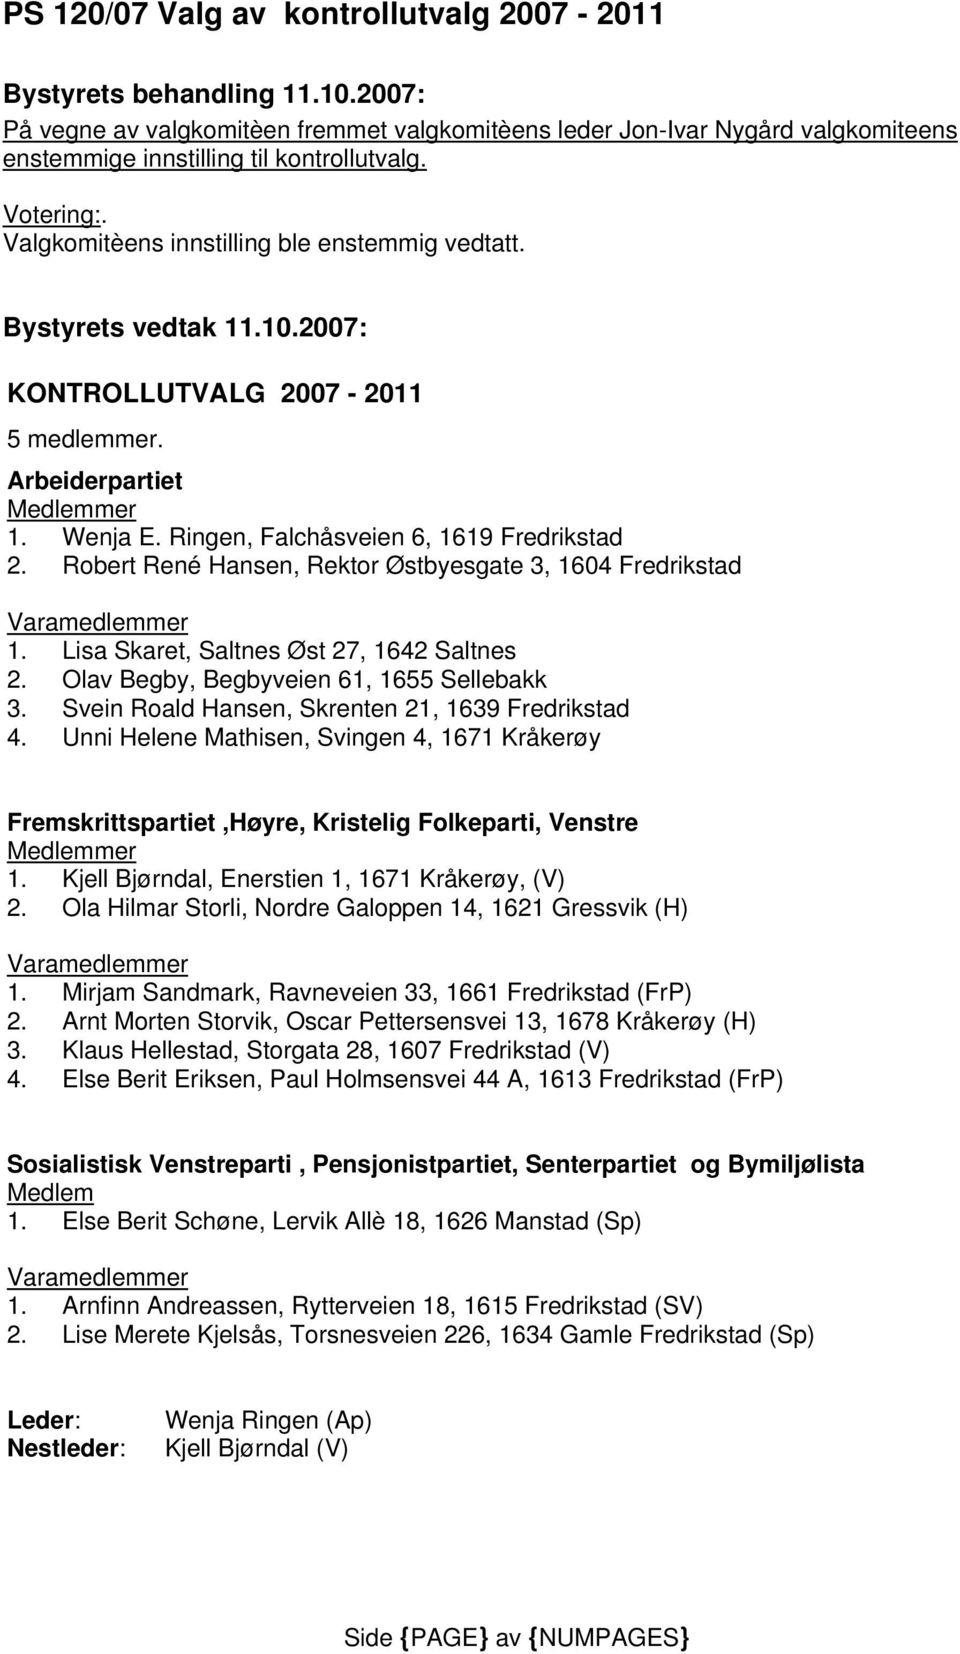 Bystyrets vedtak 11.10.2007: KONTROLLUTVALG 2007-2011 5 medlemmer. Arbeiderpartiet 1. Wenja E. Ringen, Falchåsveien 6, 1619 2. Robert René Hansen, Rektor Østbyesgate 3, 1604 1.